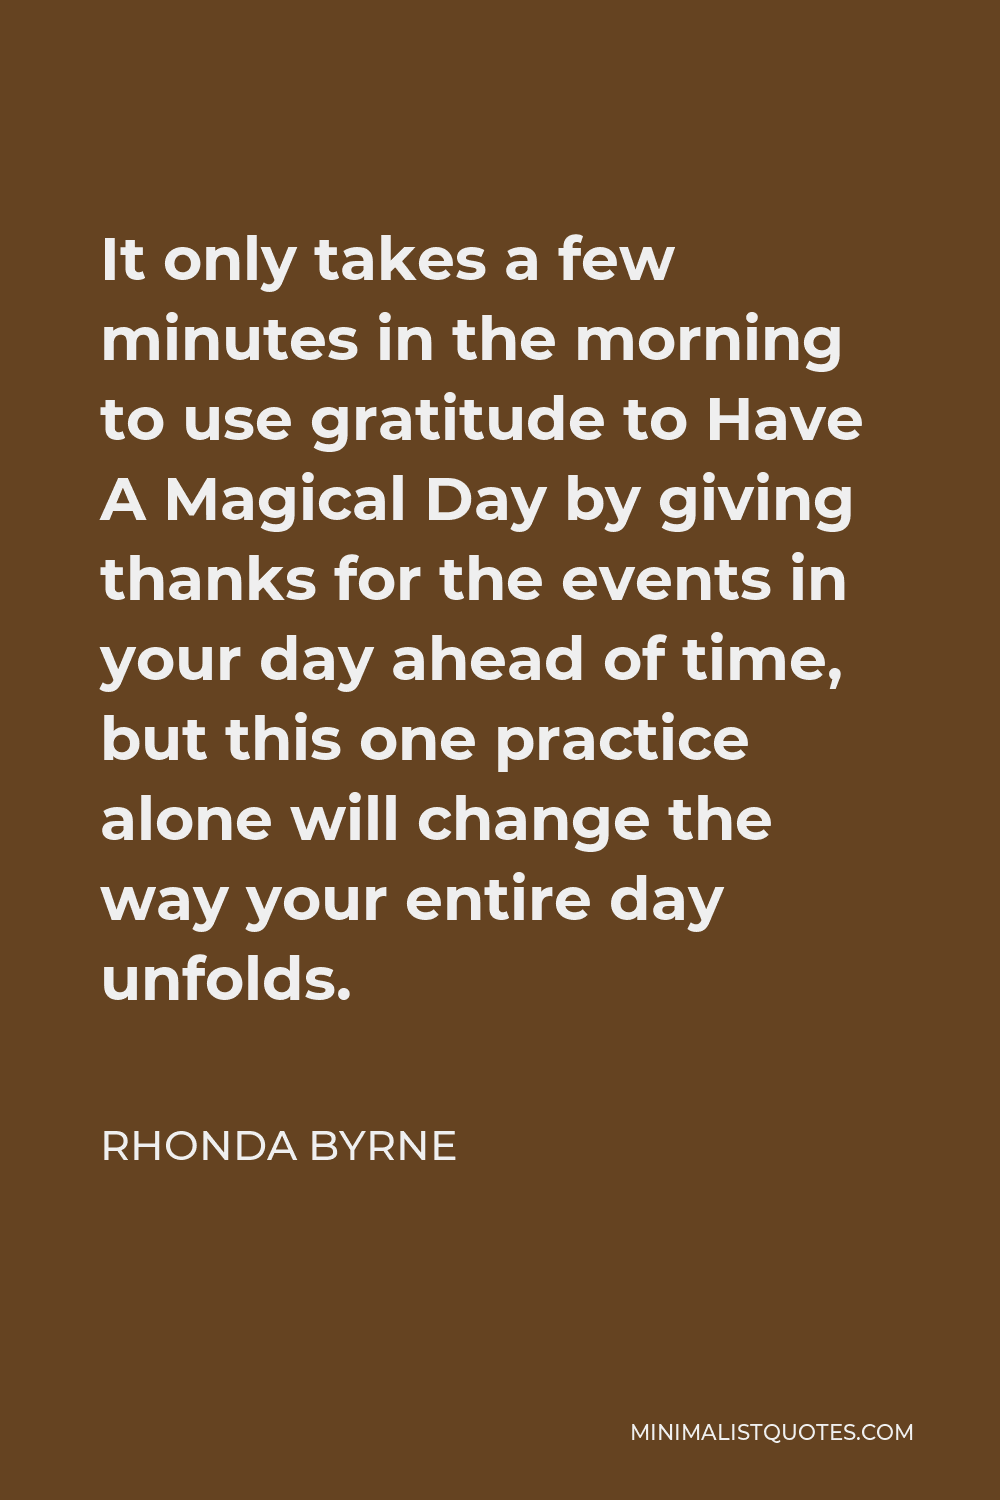 rhonda byrne the magic quotes